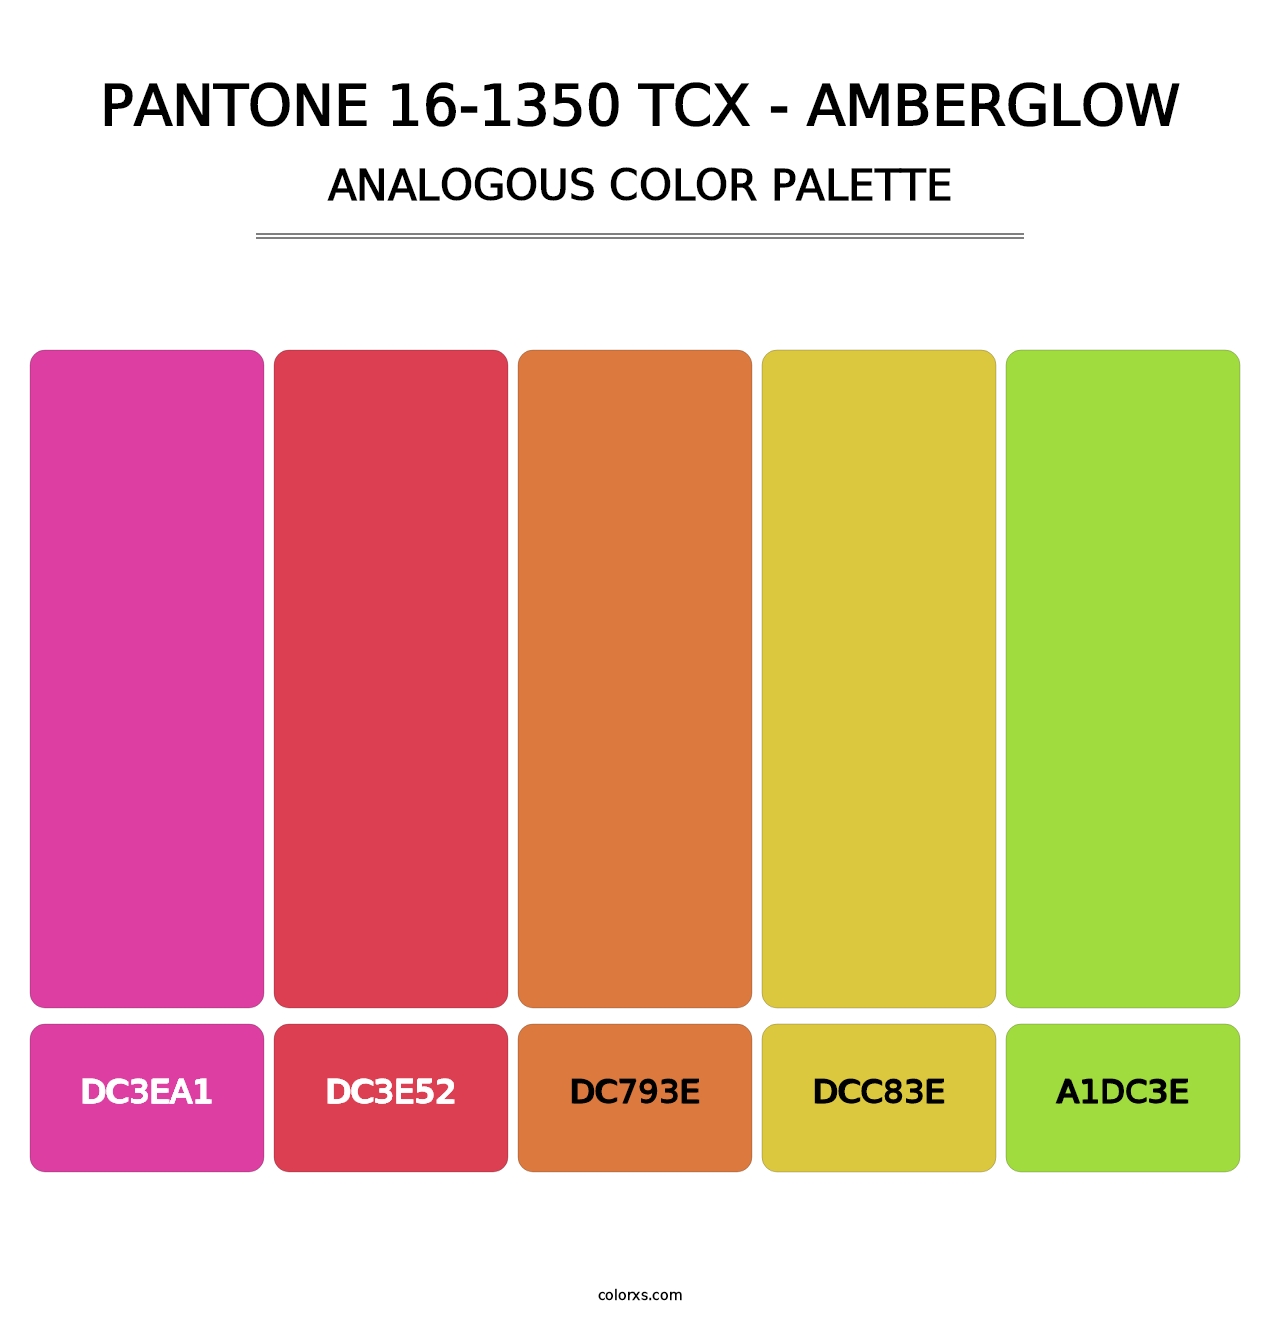 PANTONE 16-1350 TCX - Amberglow - Analogous Color Palette